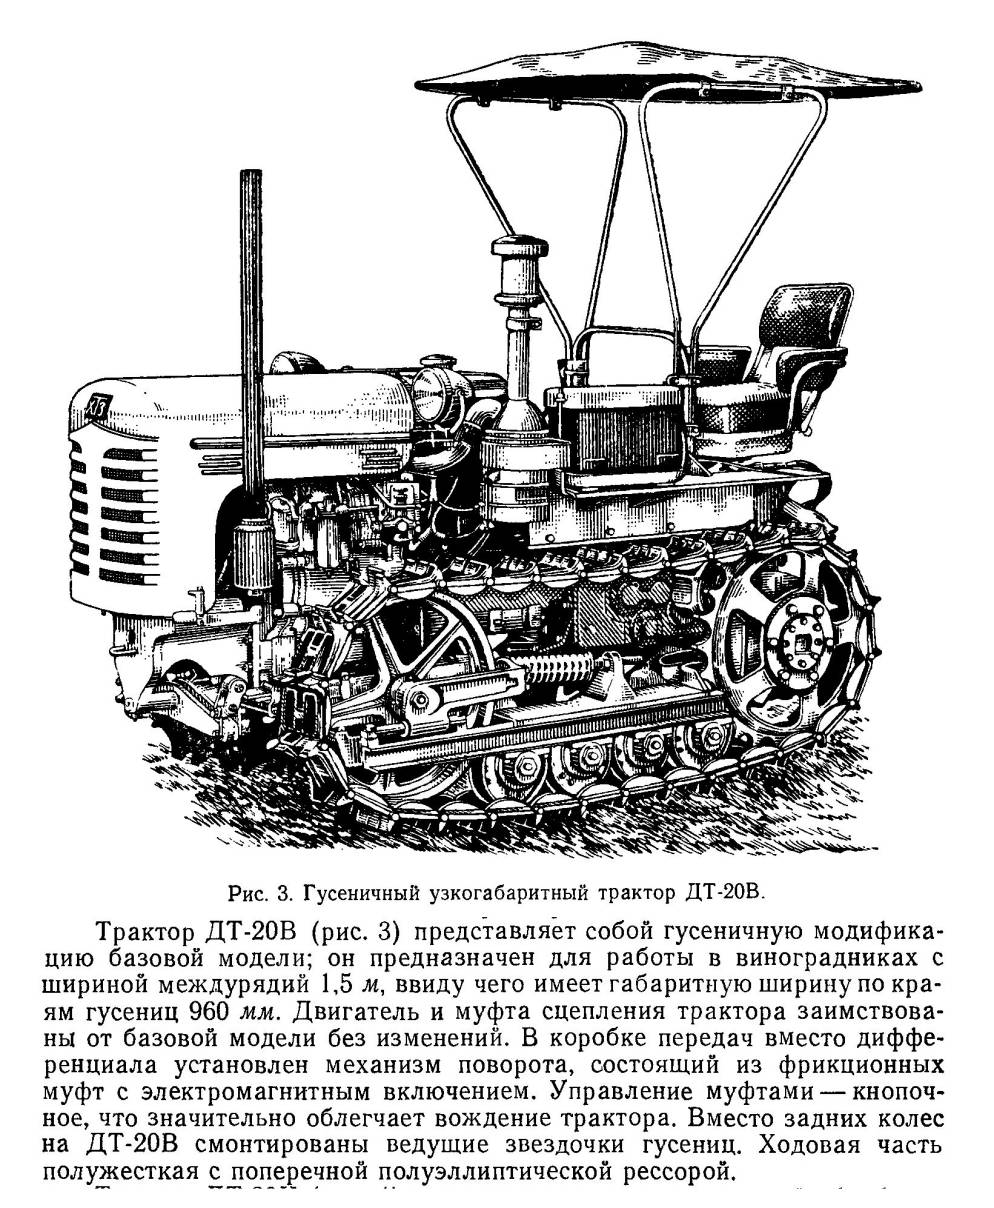 Технические характеристики трактора дт-20 и его модификации